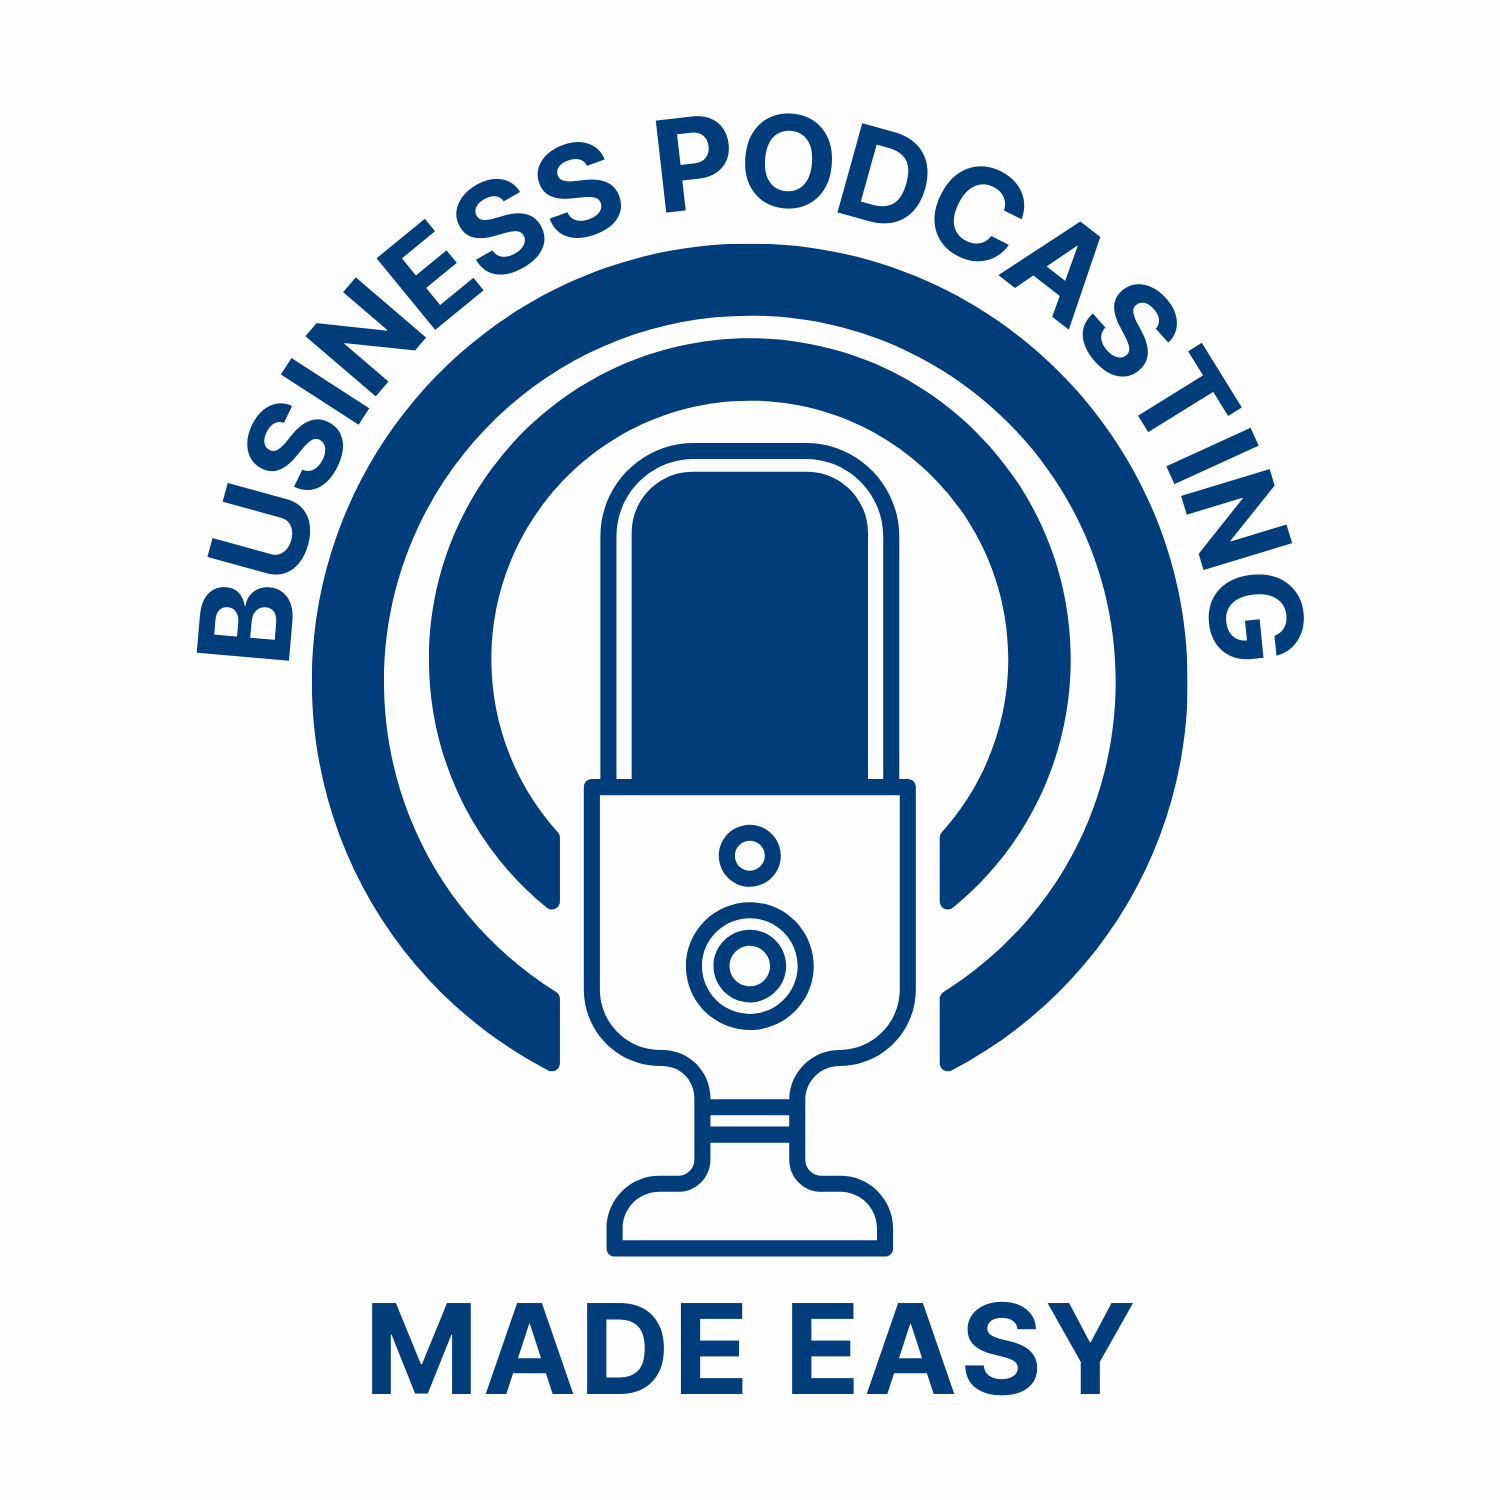 Show artwork for Business Podcasting Made Easy